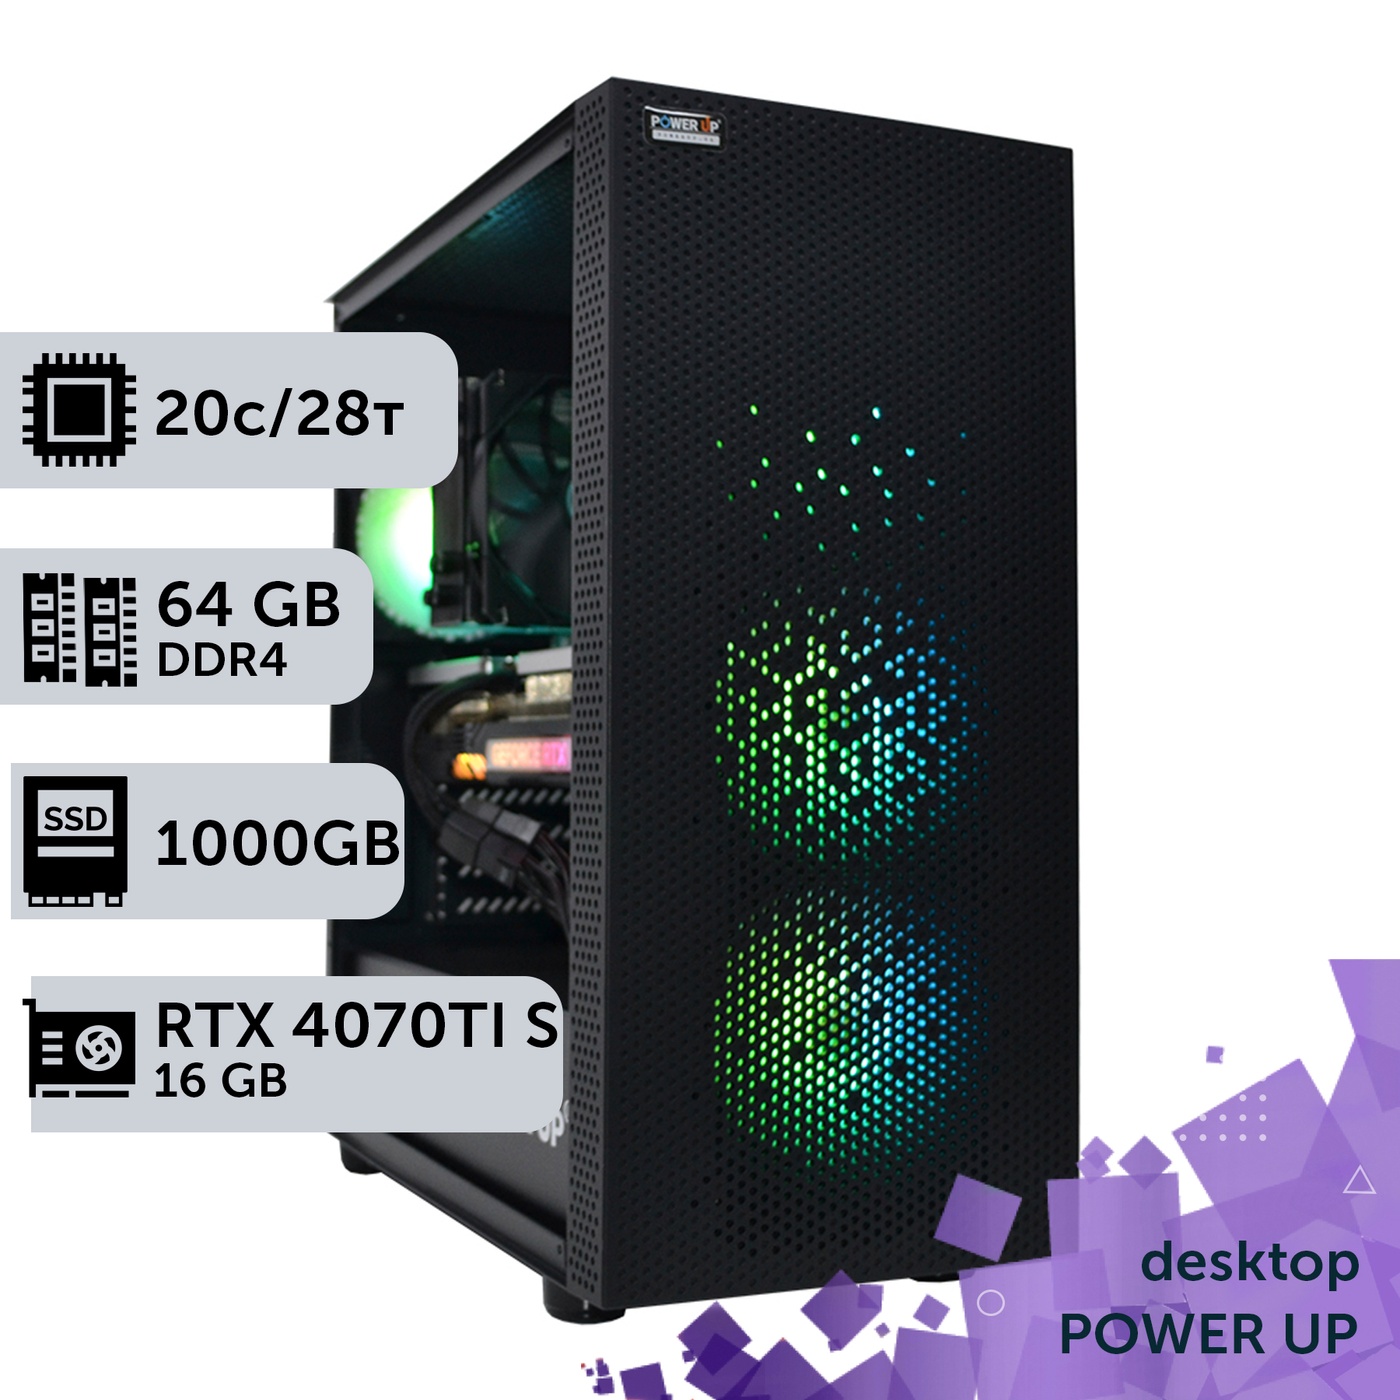 Рабочая станция PowerUp Desktop #353 Core i7 14700K/64 GB/SSD 1TB/GeForce RTX 4070Ti Super 16GB